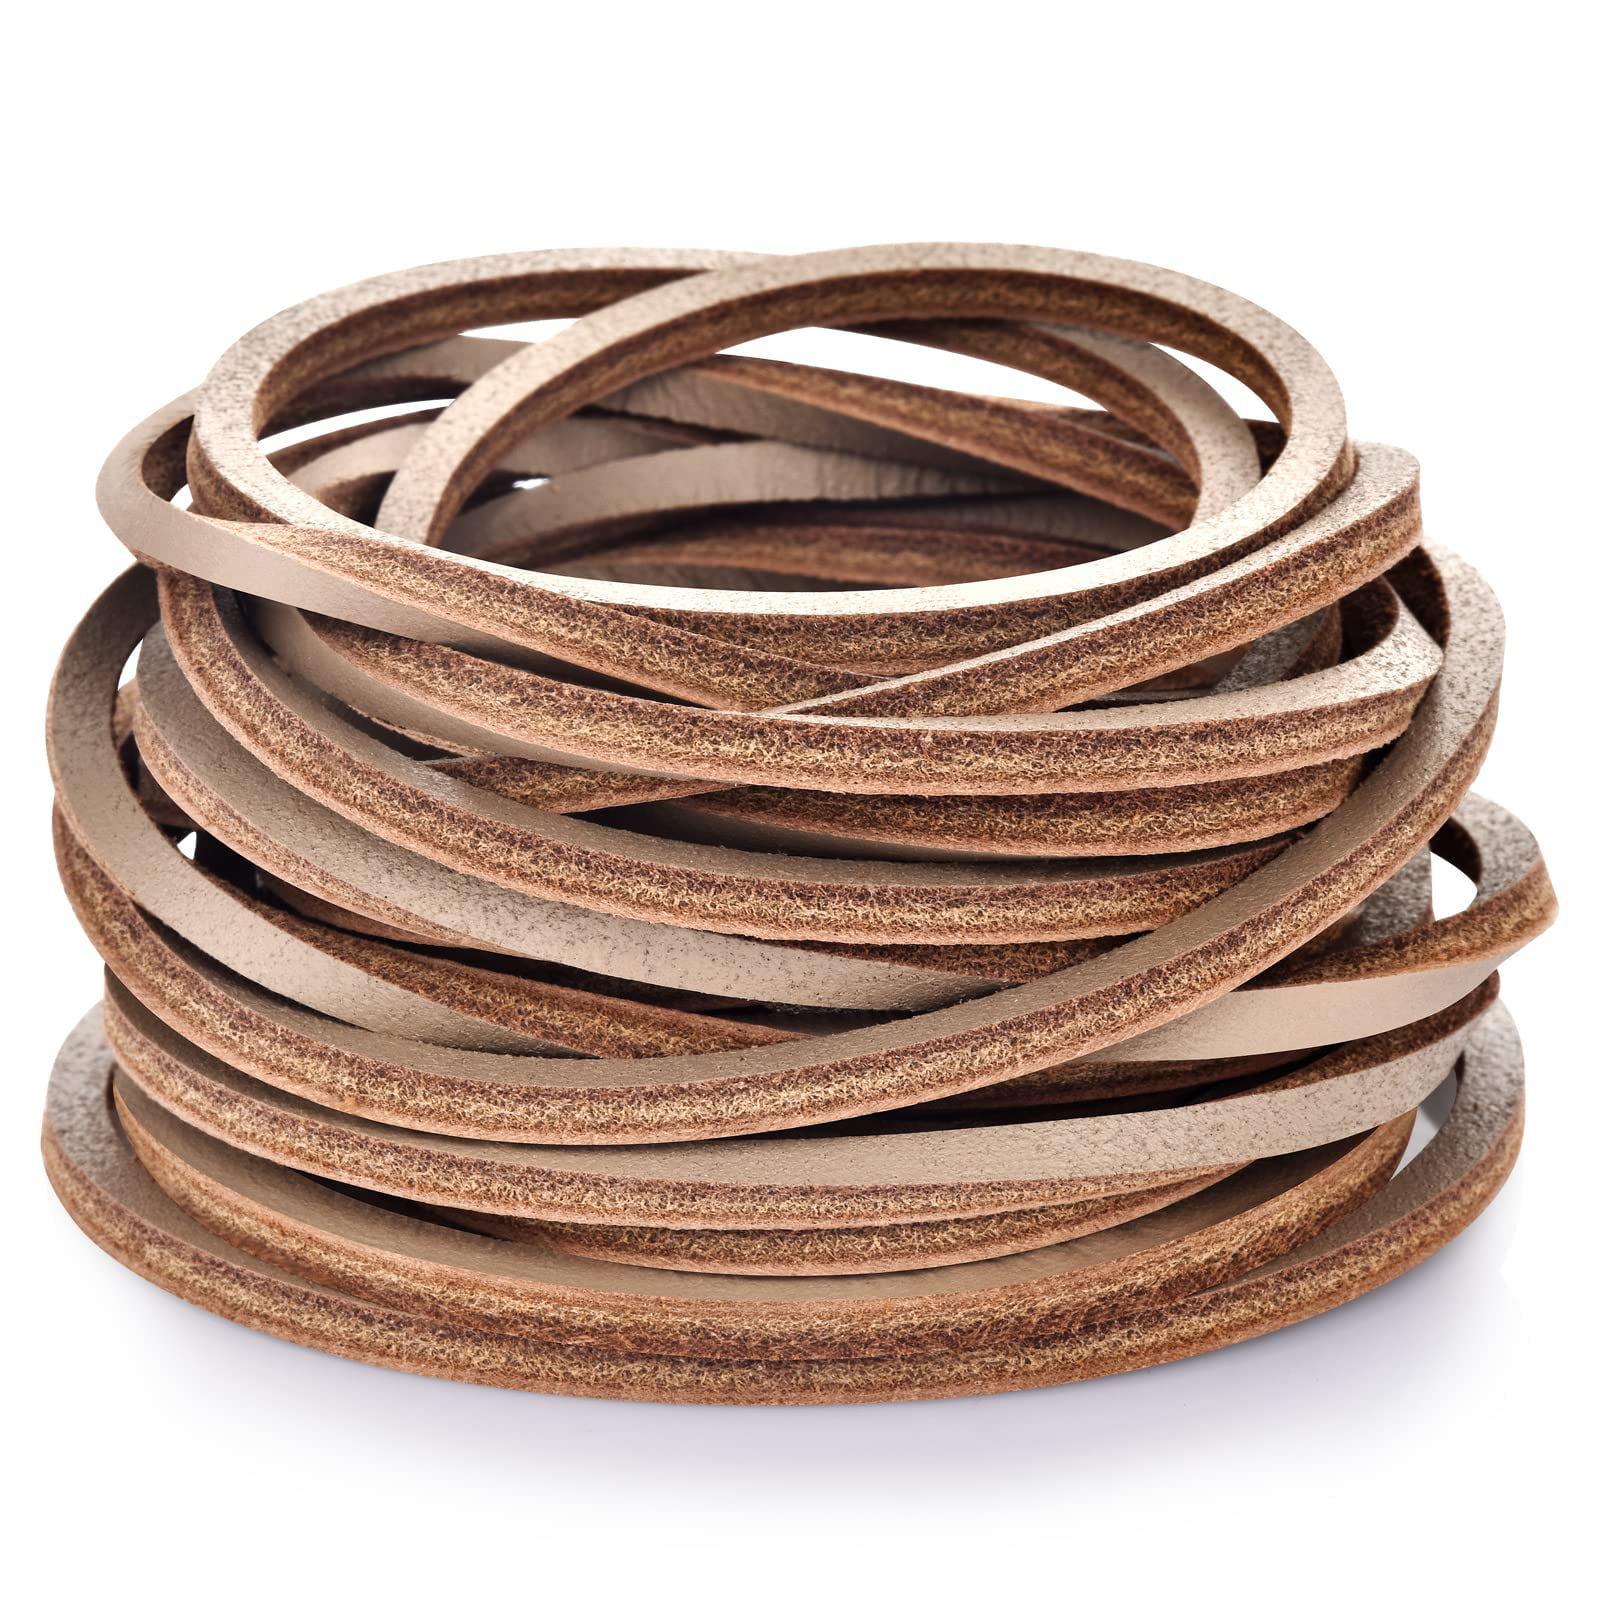 LolliBeads (TM) 3mm Flat Genuine Leather Strip Cord Braiding String Dark  Brown Espresso (5 Yards) 3mm_5yards Flat_dark_brown